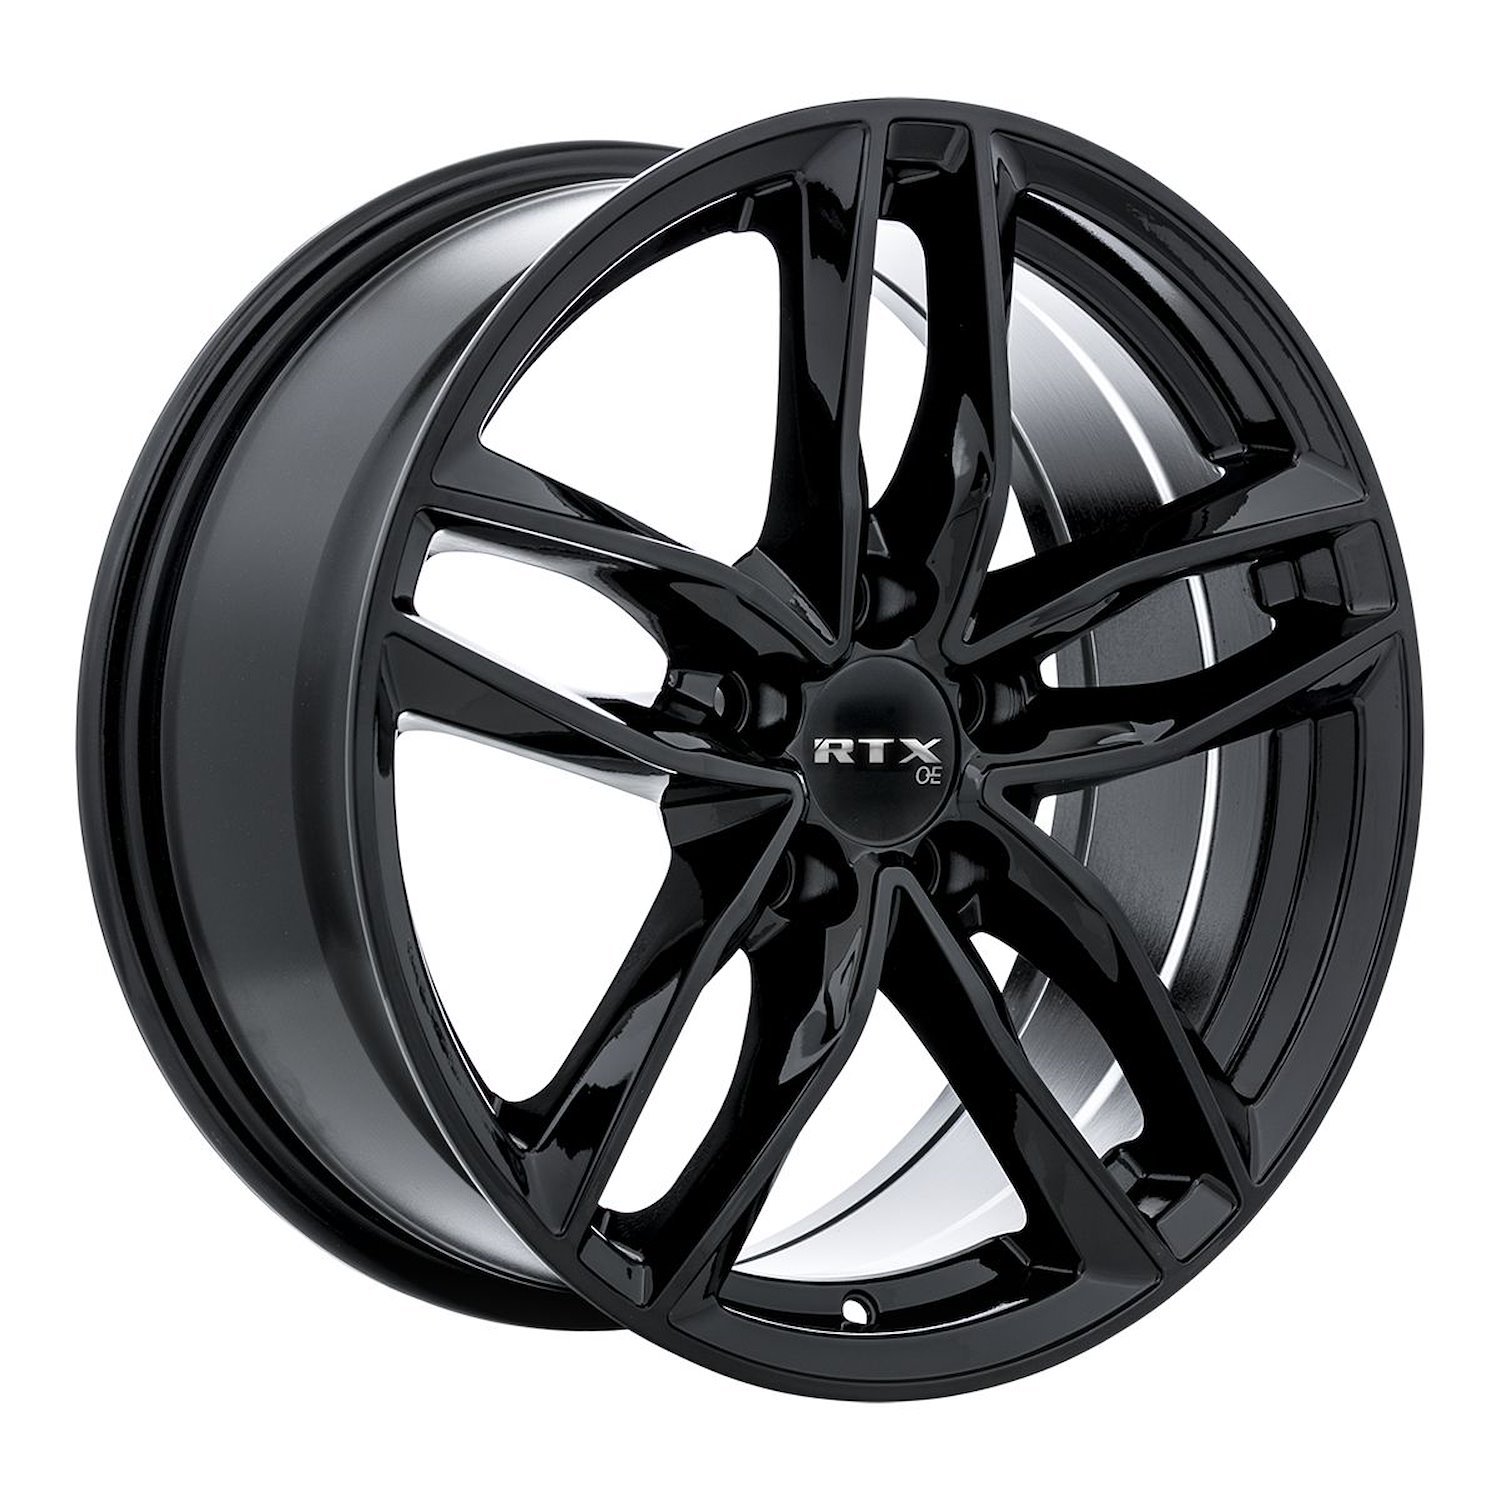 507401 OE-Series Nuremberg Wheel [Size: 17" x 7.50"] Gloss Black Finish